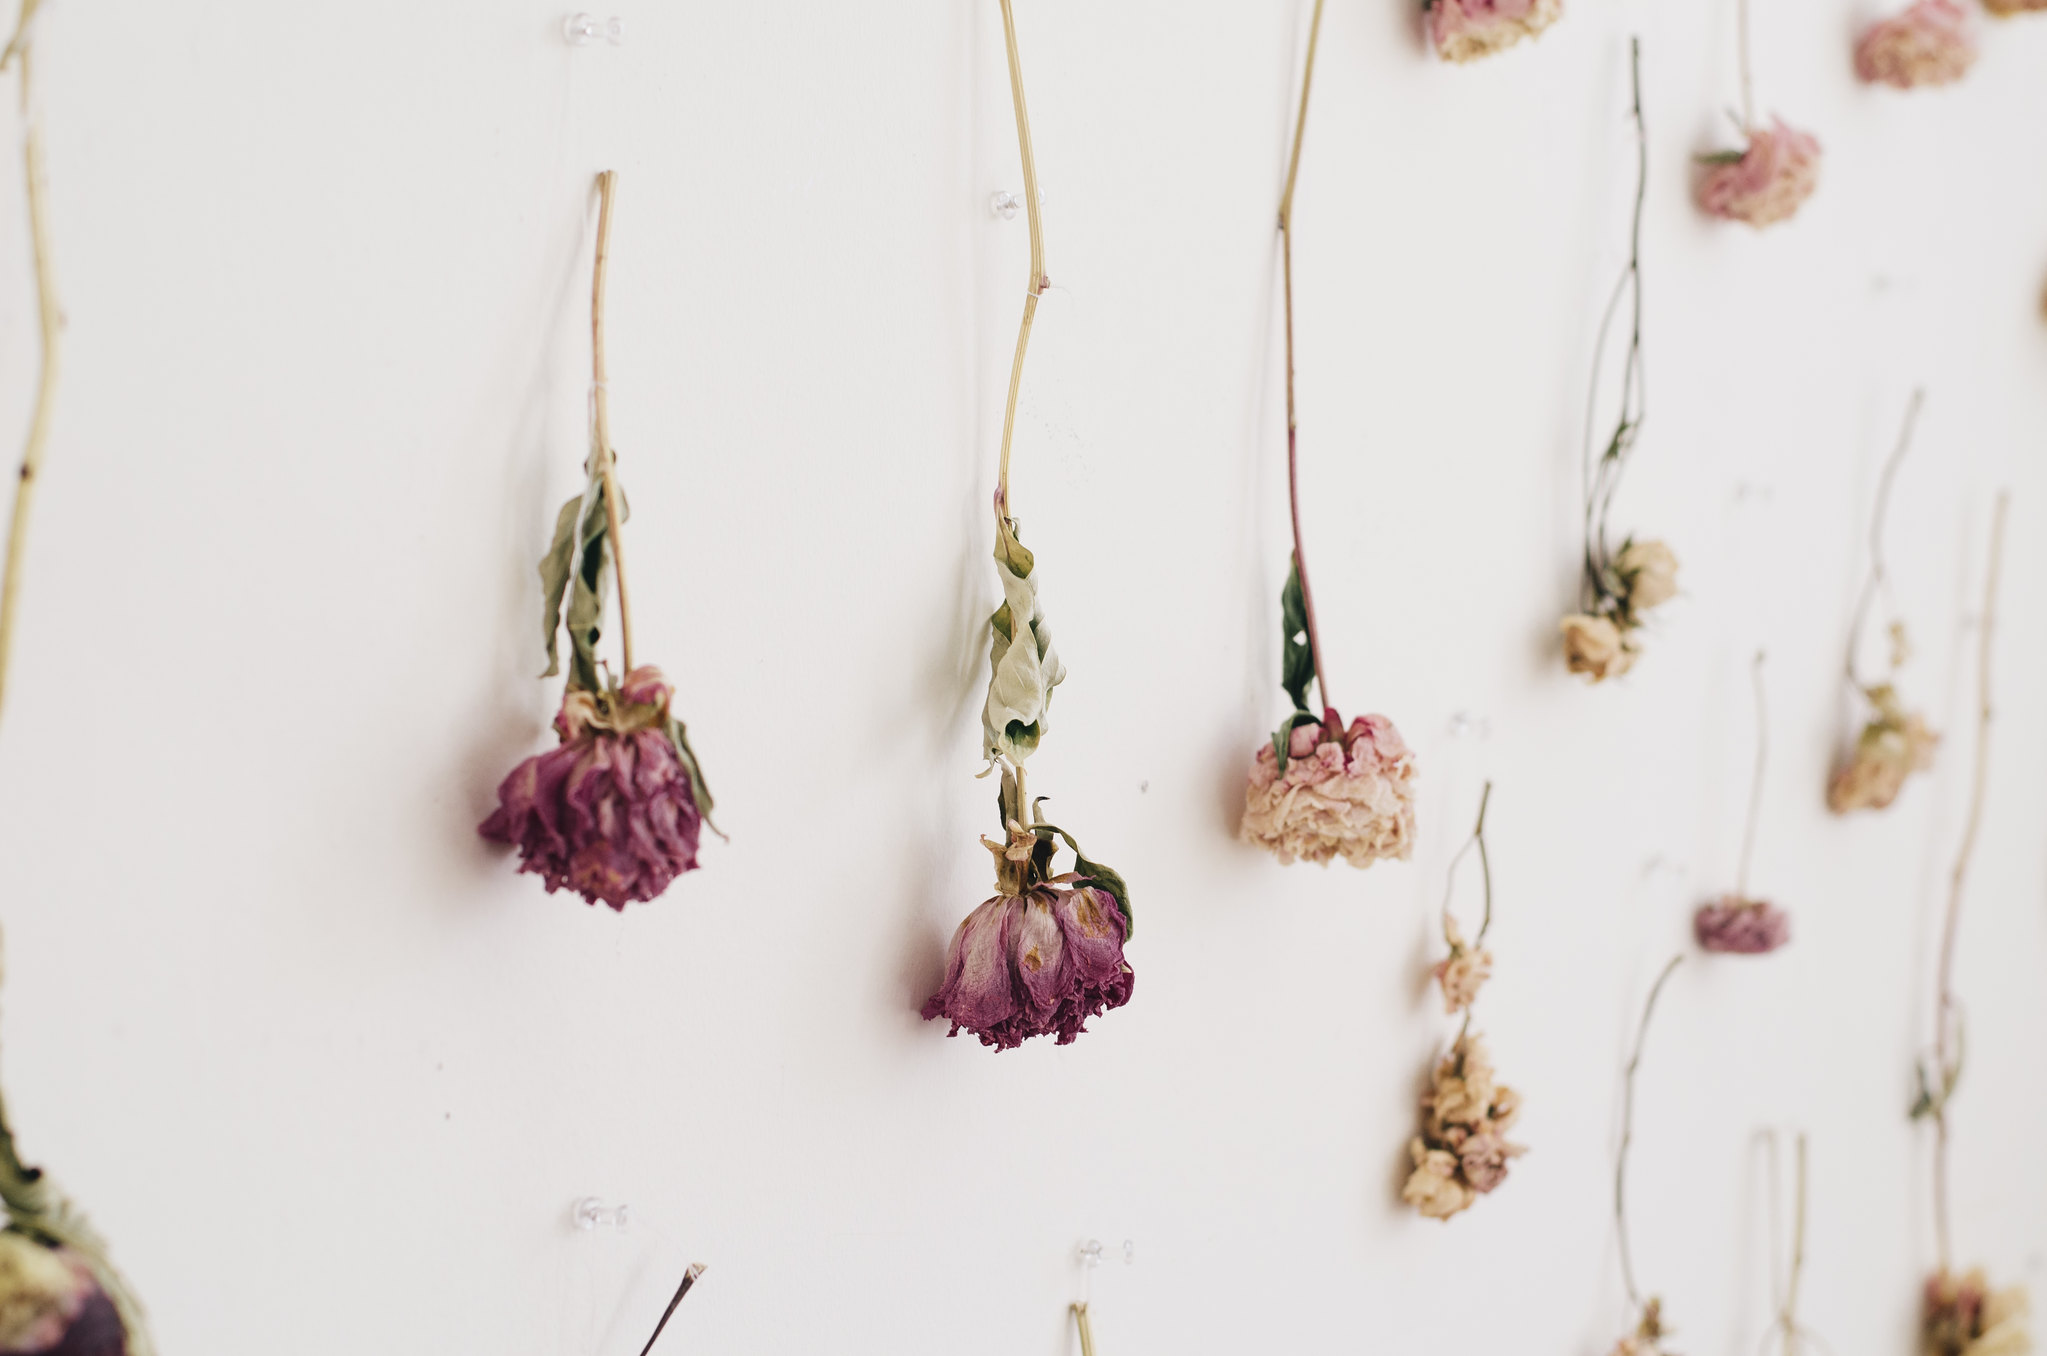 How To Hang Dried Flowers on juliettelaura.blogspot.com